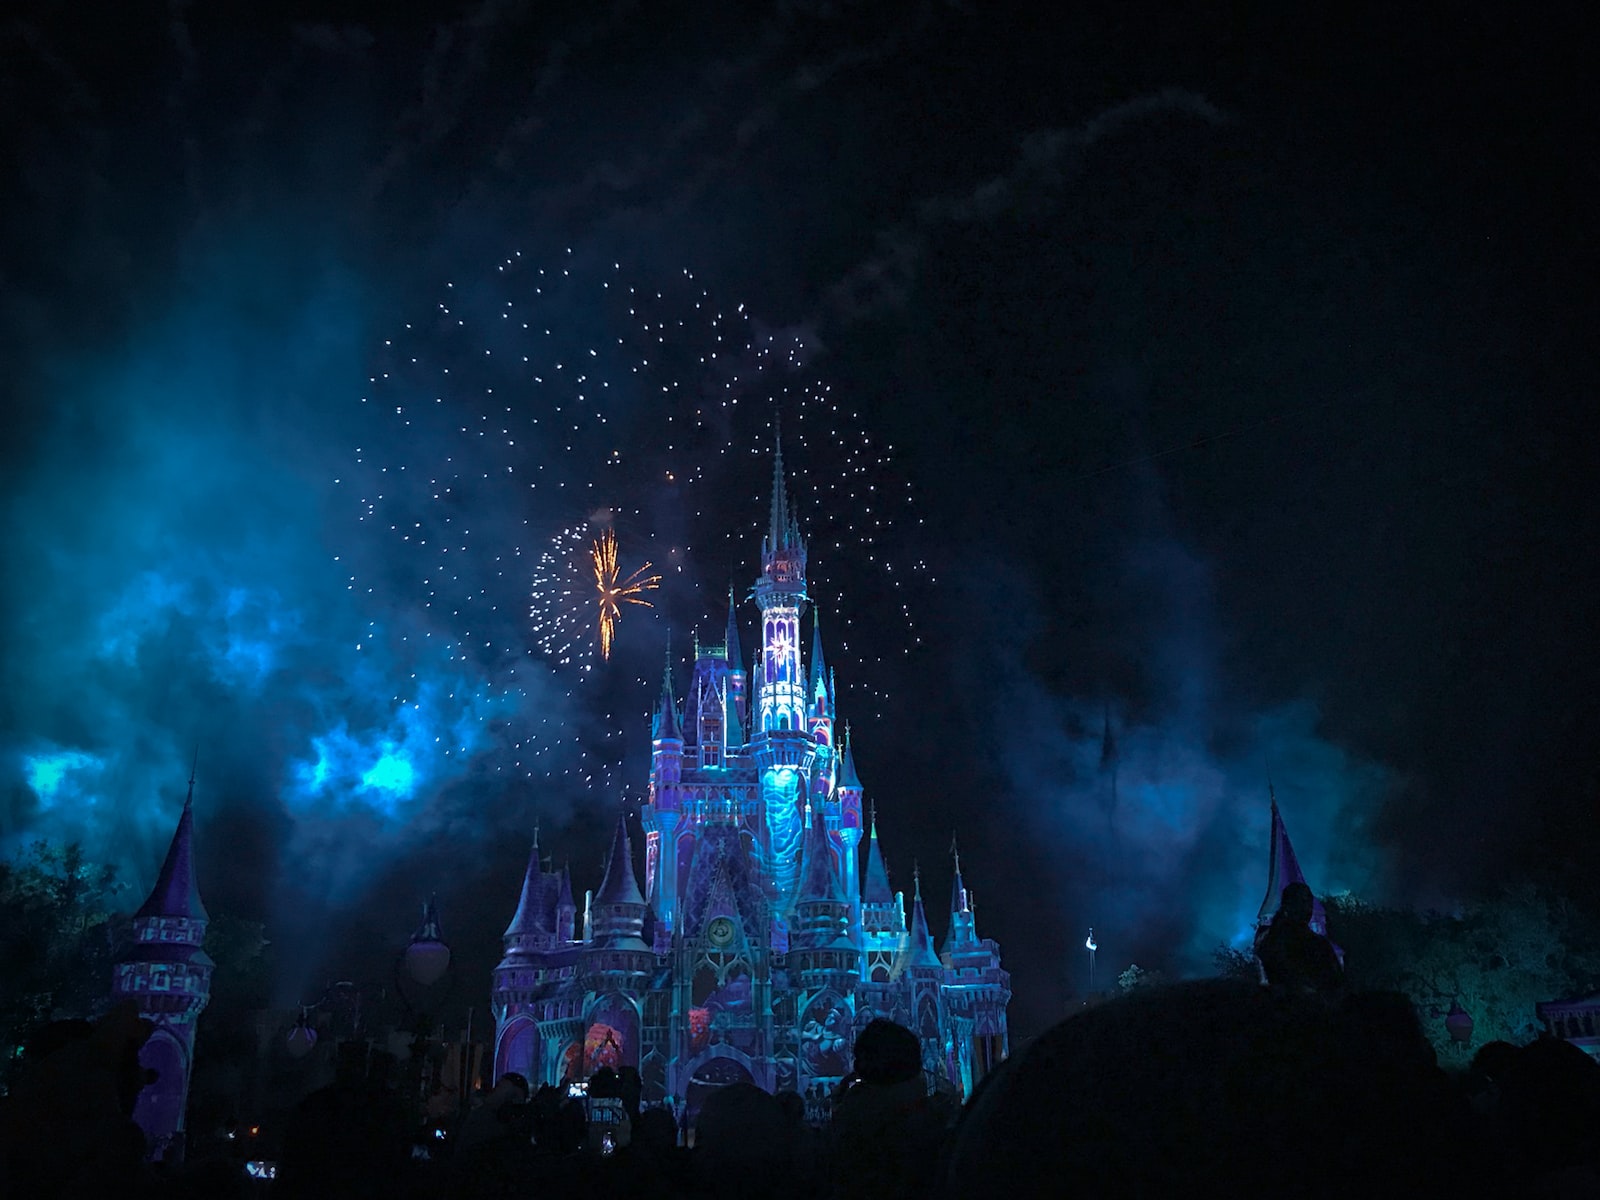 Walt Disney crystal castle with fireworks at night